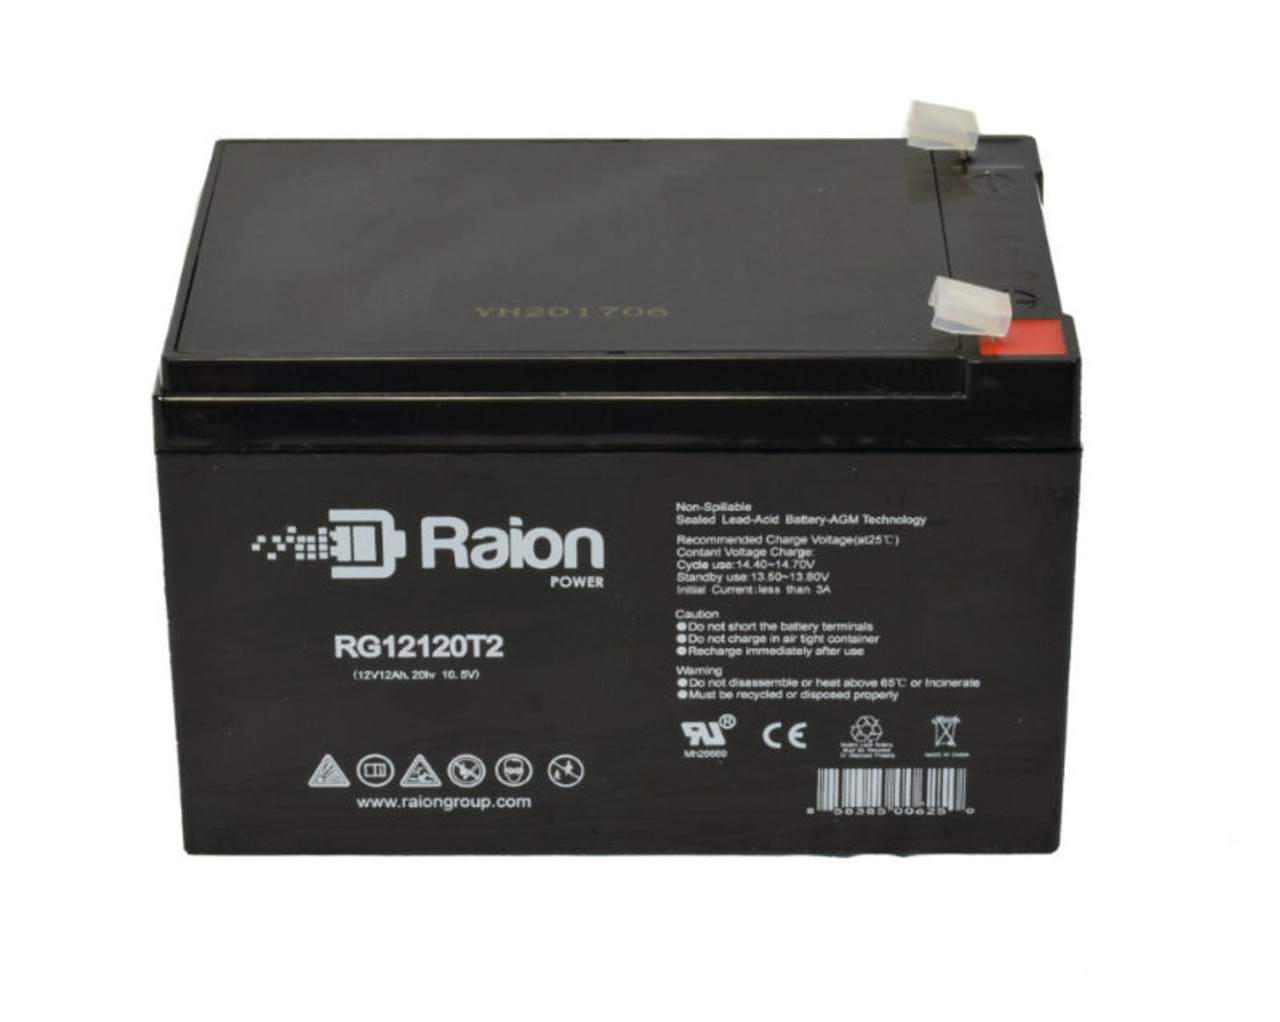 Raion Power RG12120T2 SLA Battery for Orthopedic System 6850 Profx Orthopedic Surgical Table